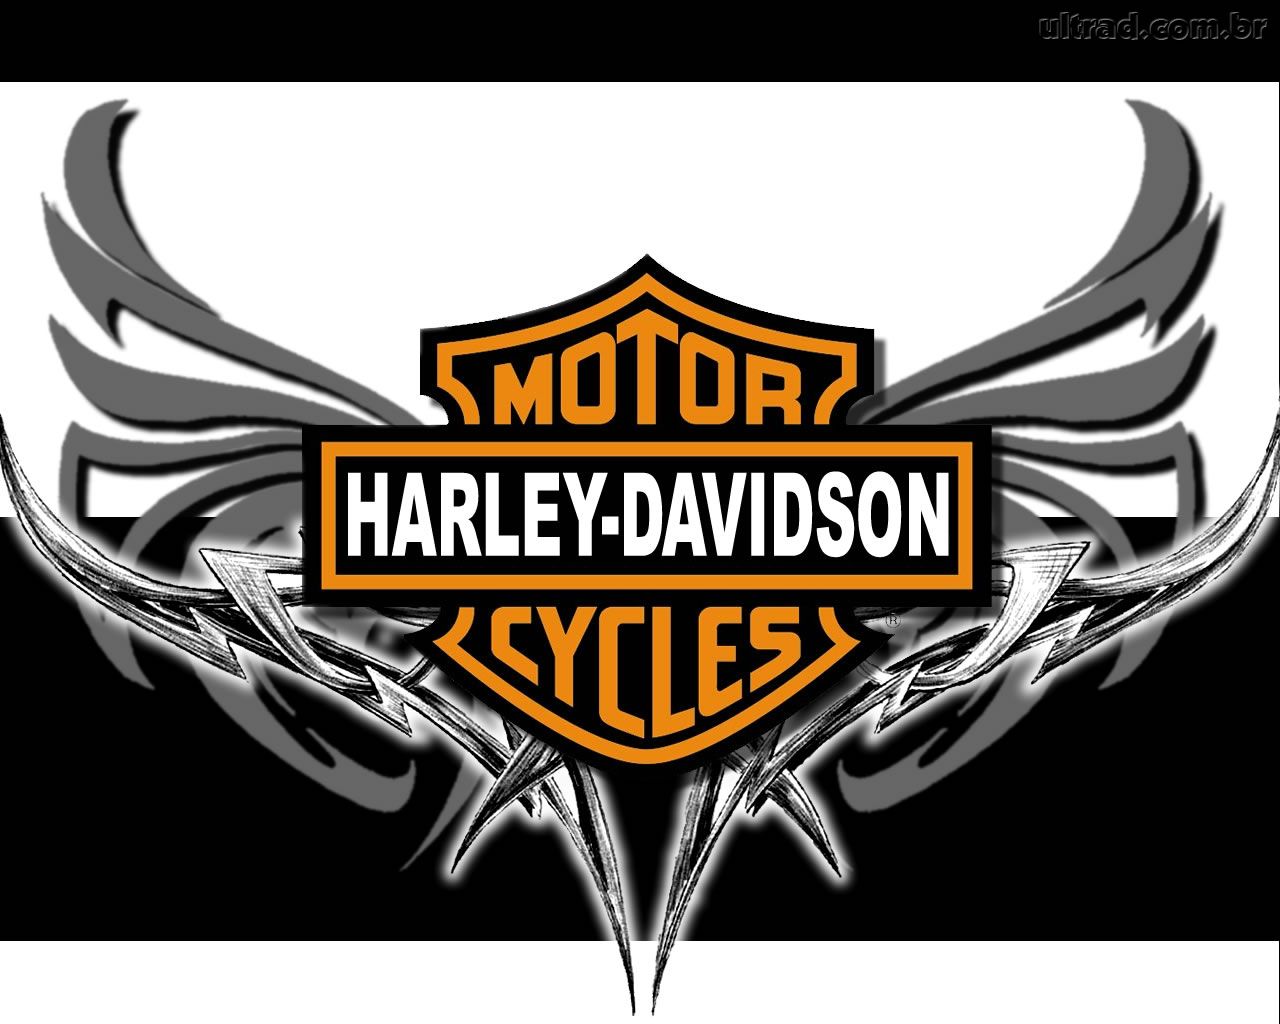 Harley Davidson Wallpaper Collection